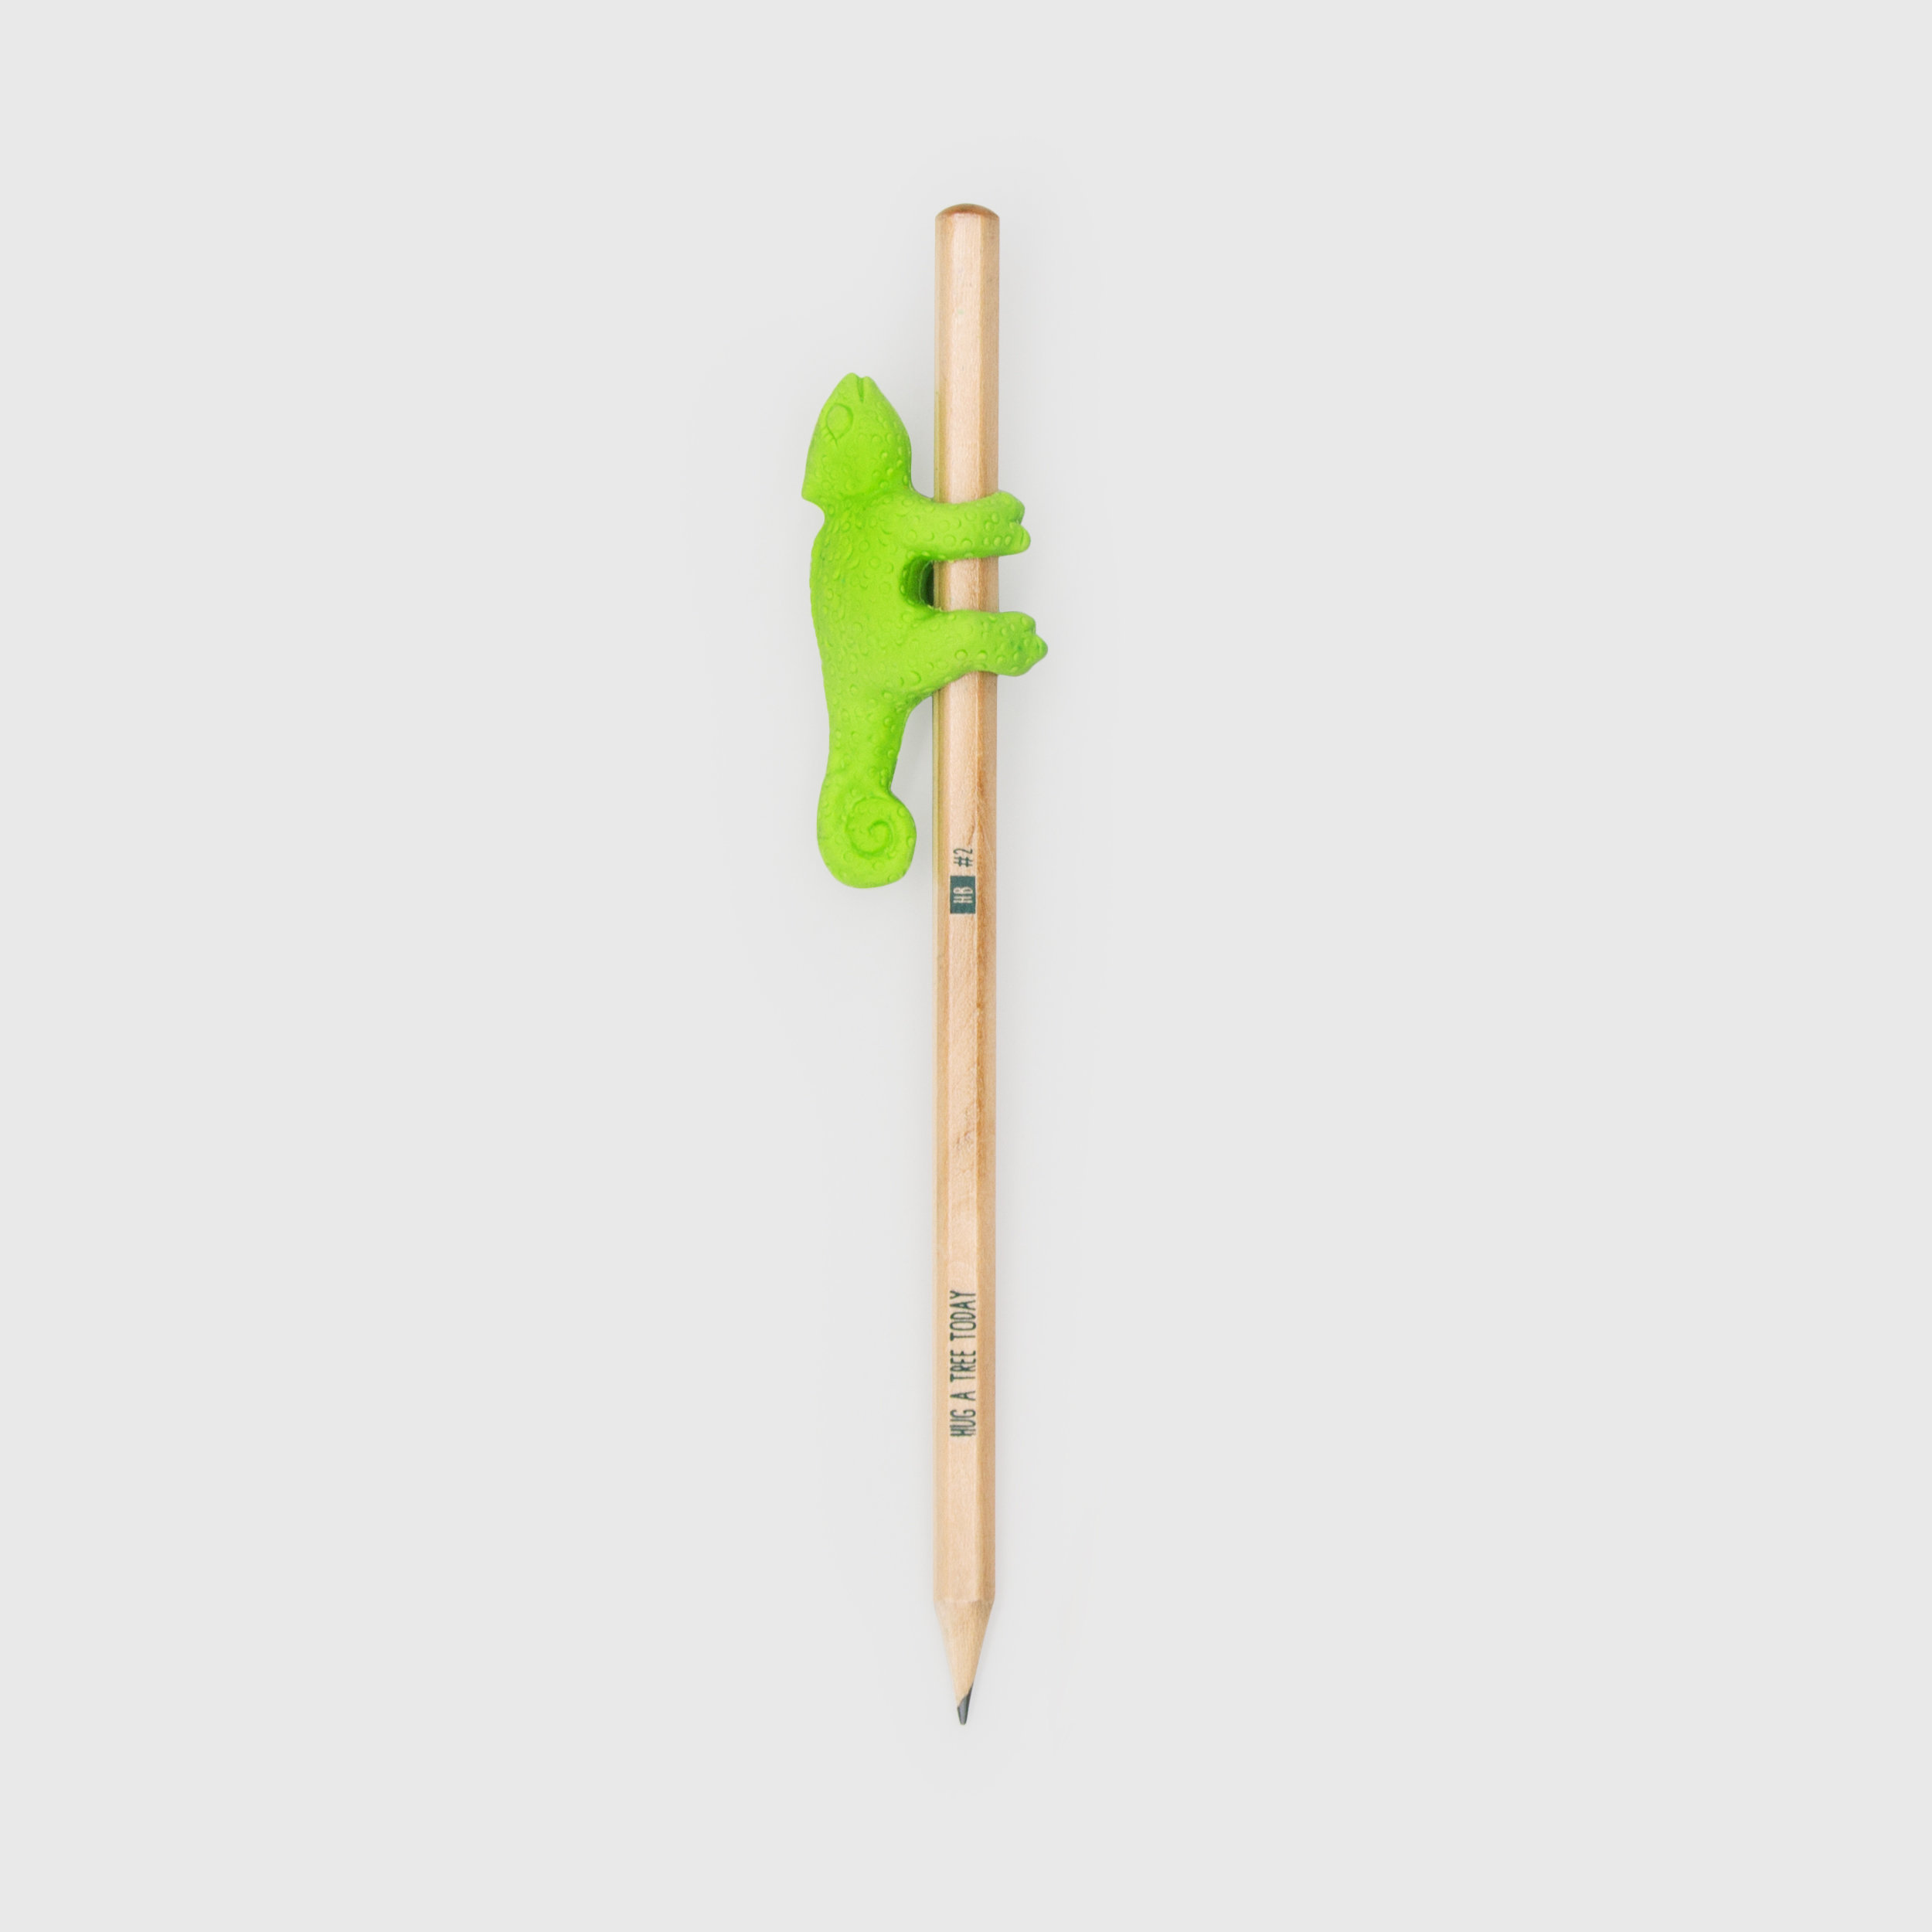 Chameleon animal eraser and wooden pencil